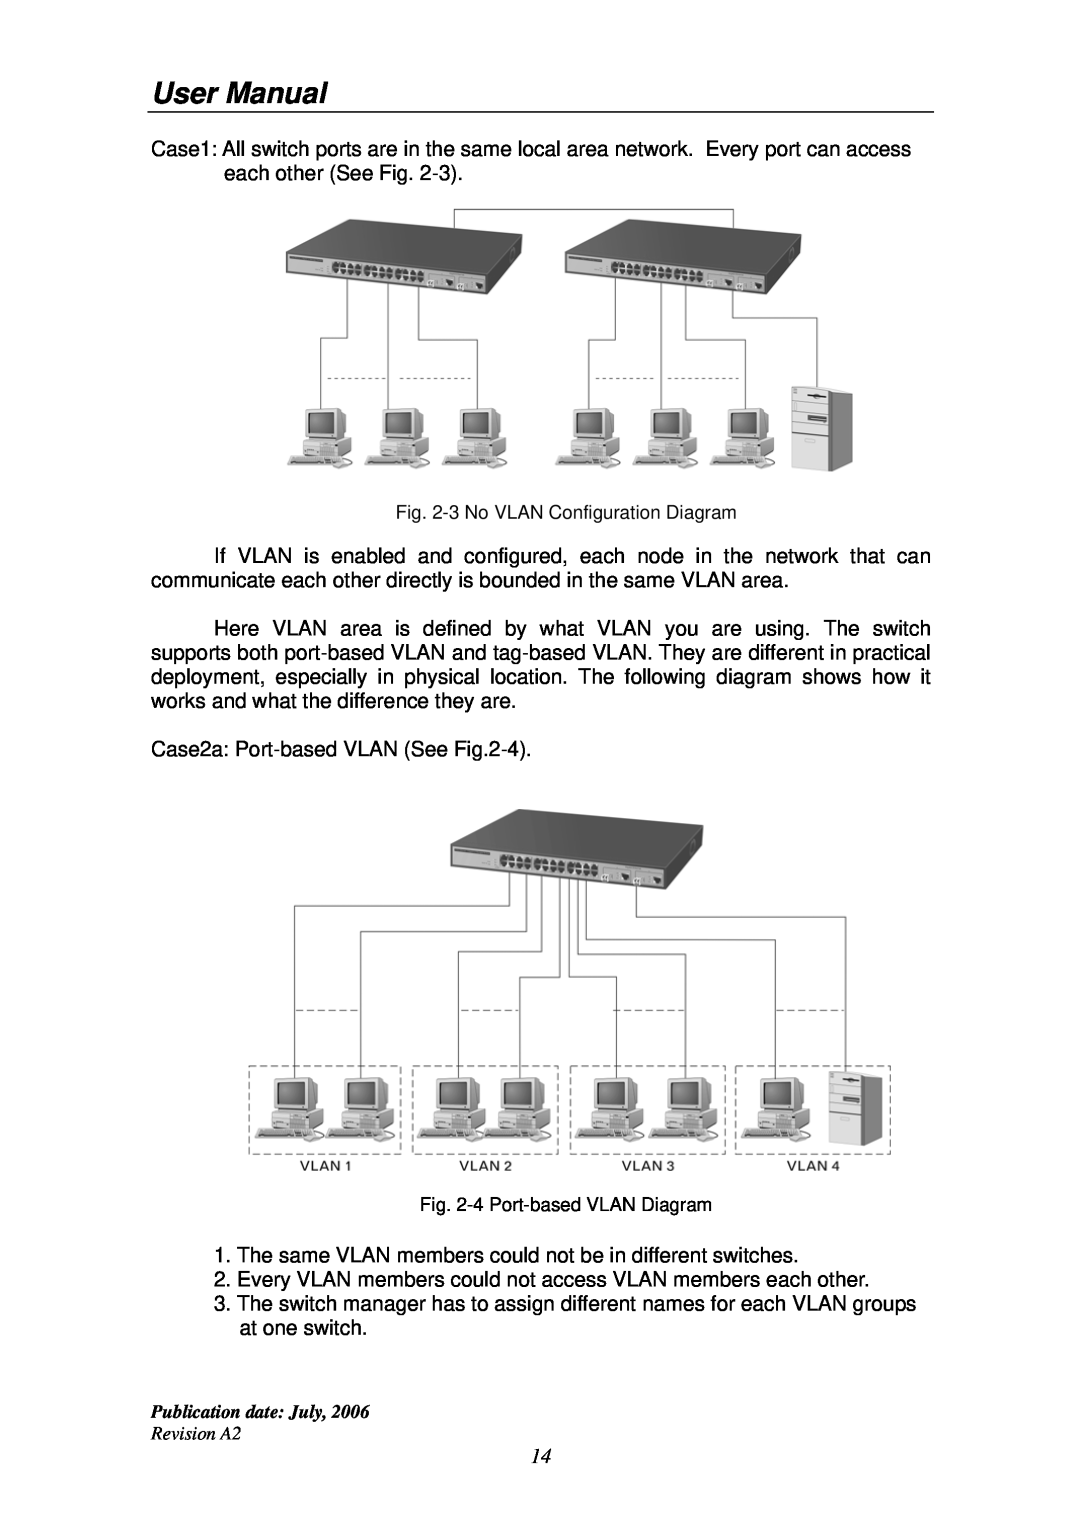 Edimax Technology ES-5224RS+ user manual User Manual, Case2a Port-based VLAN See -4 